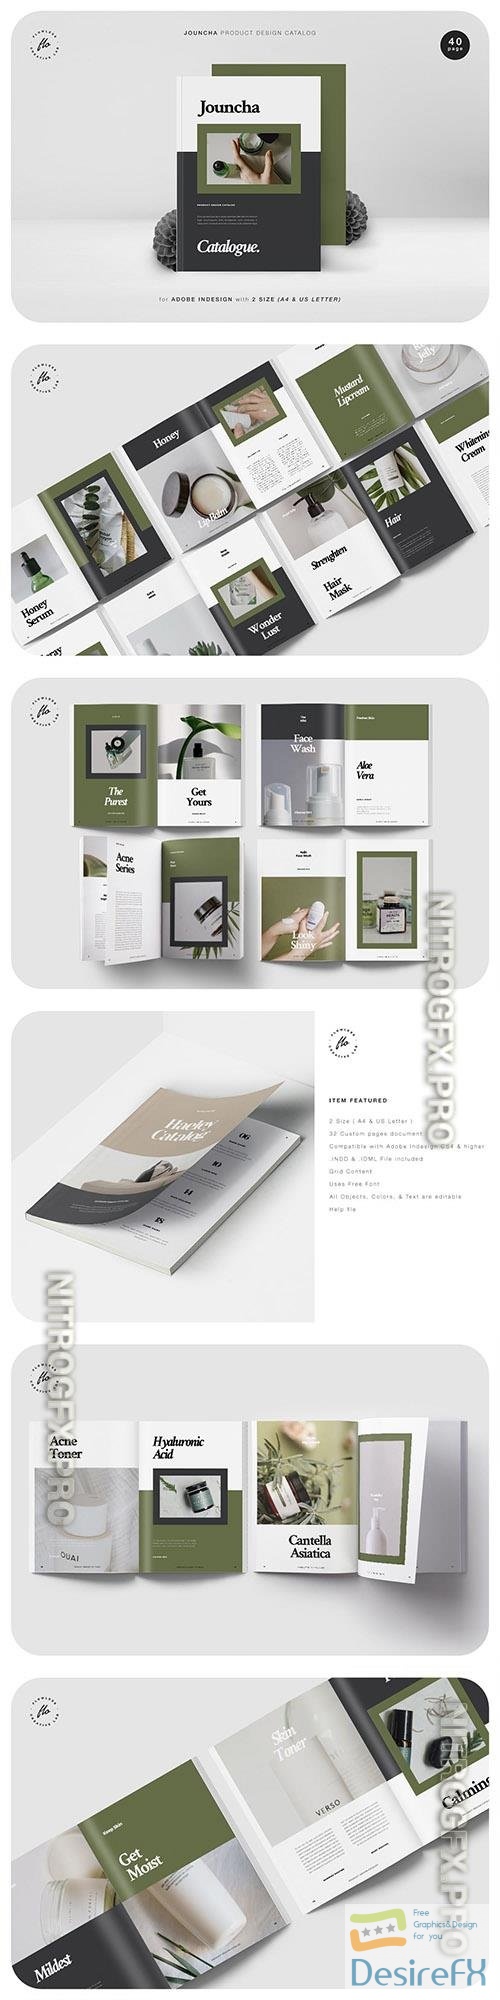 Jouncha Product Design Catalog UJ9VBRE